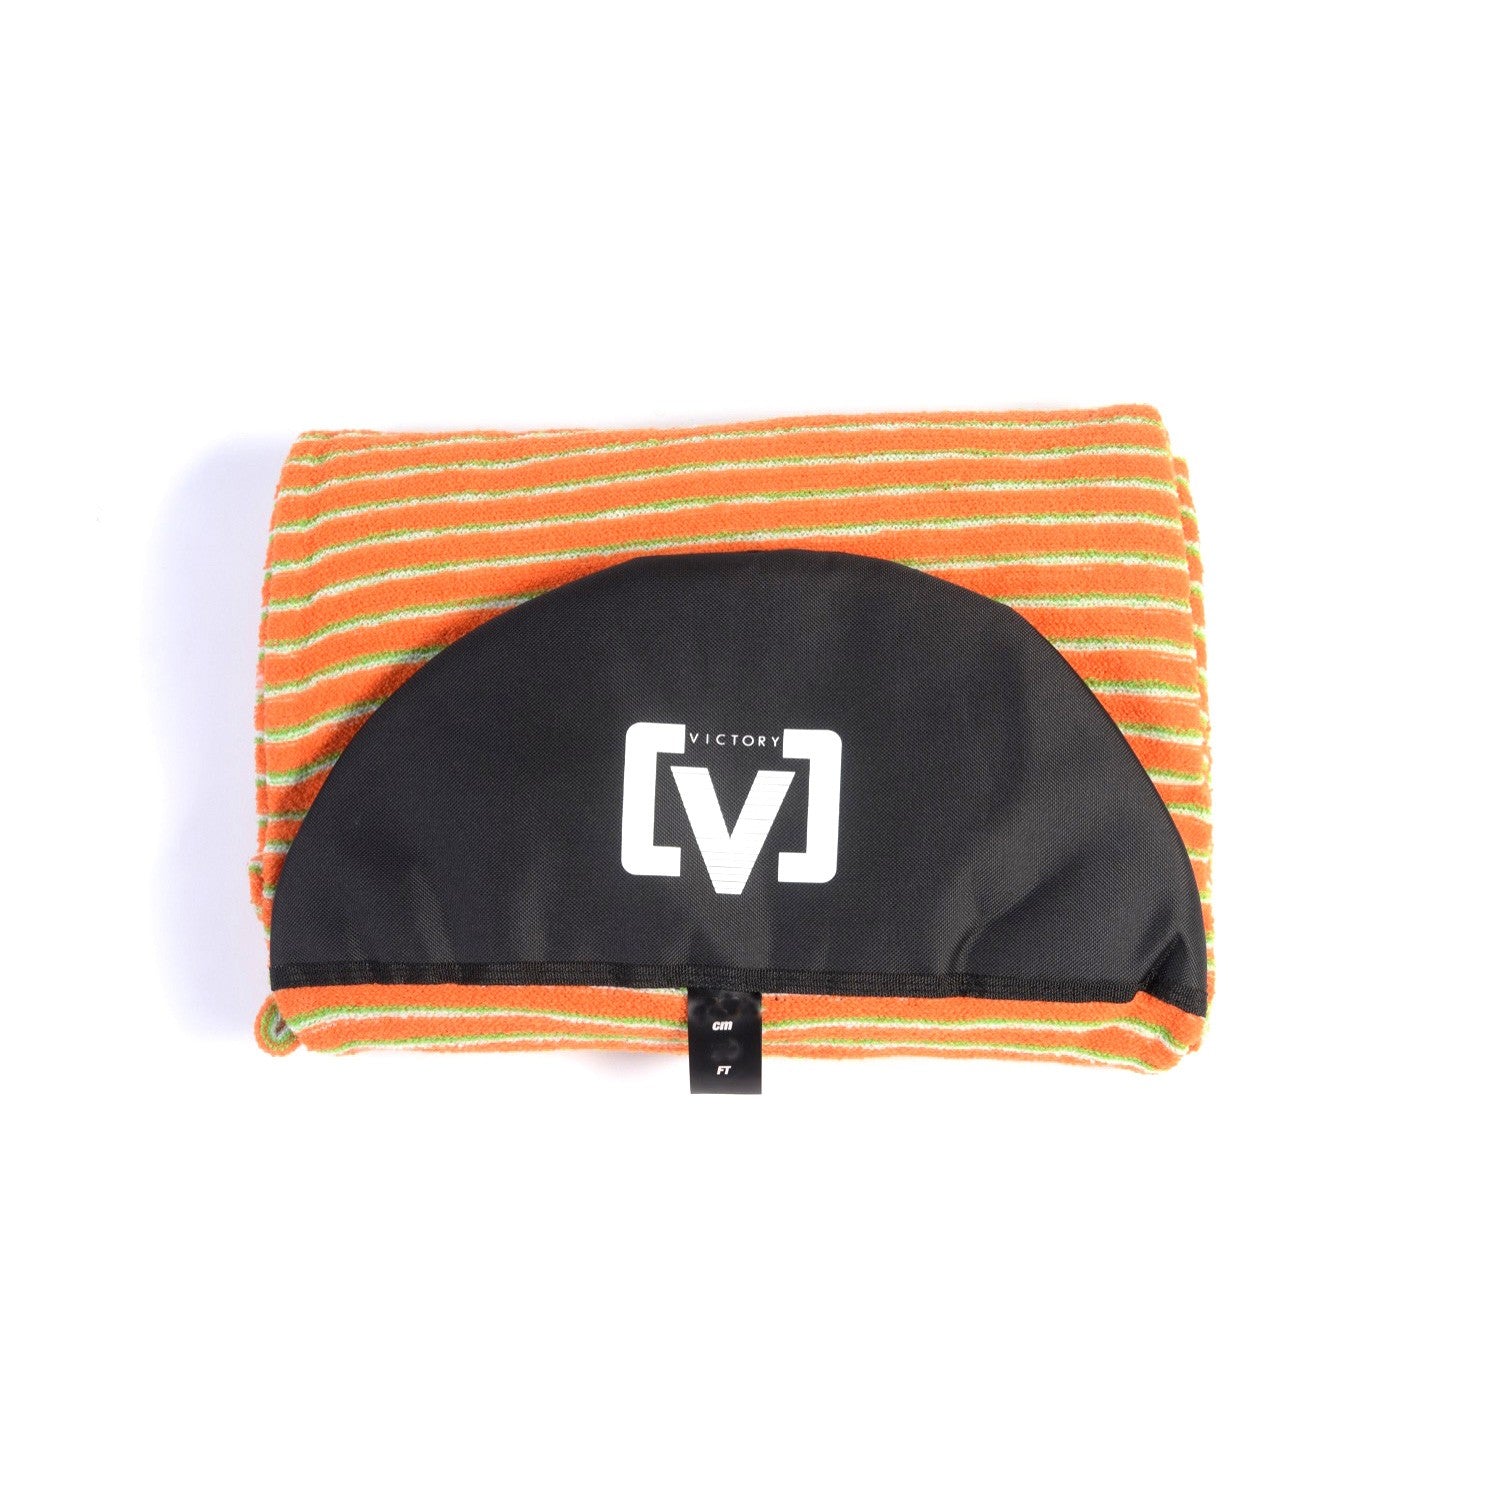 VICTORY - Longboard sock cover - 8'6 - Orange / Green